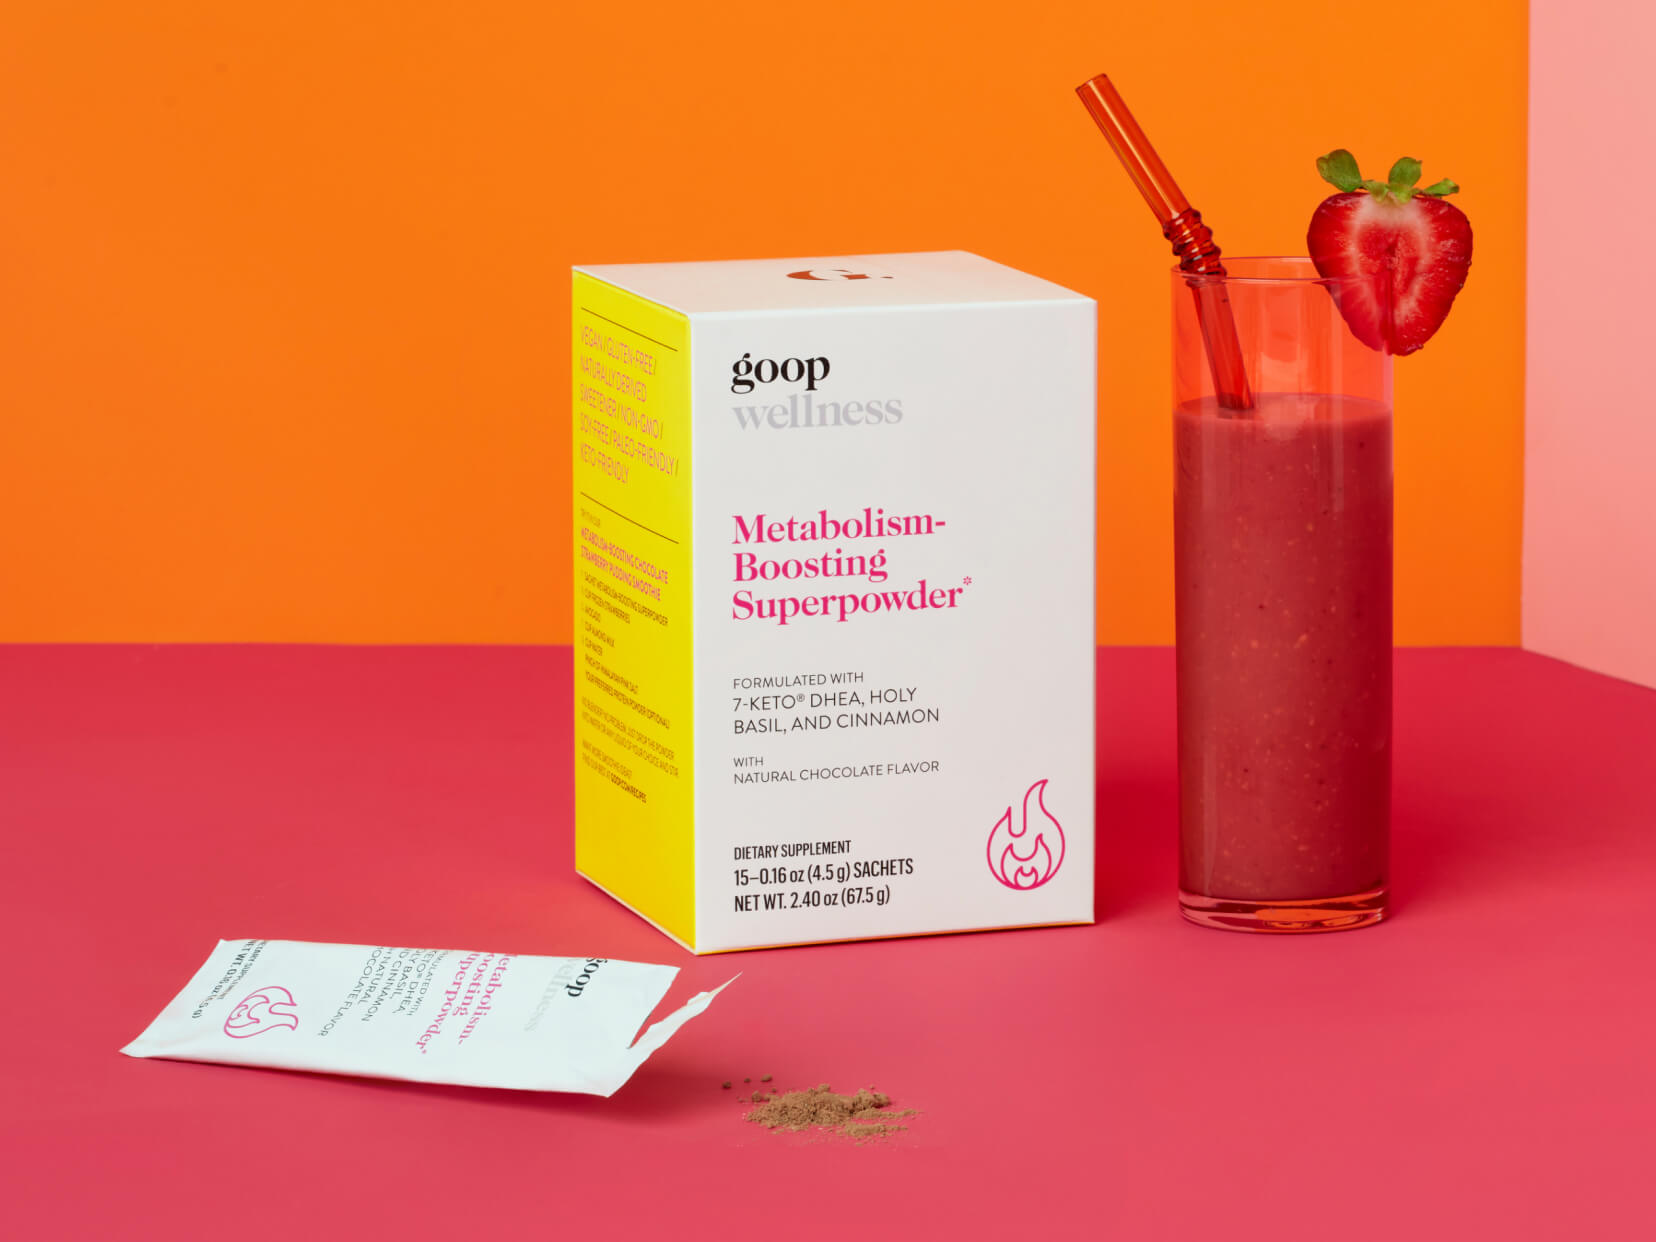 goop Metabolism-Boosting Superpowder on a table